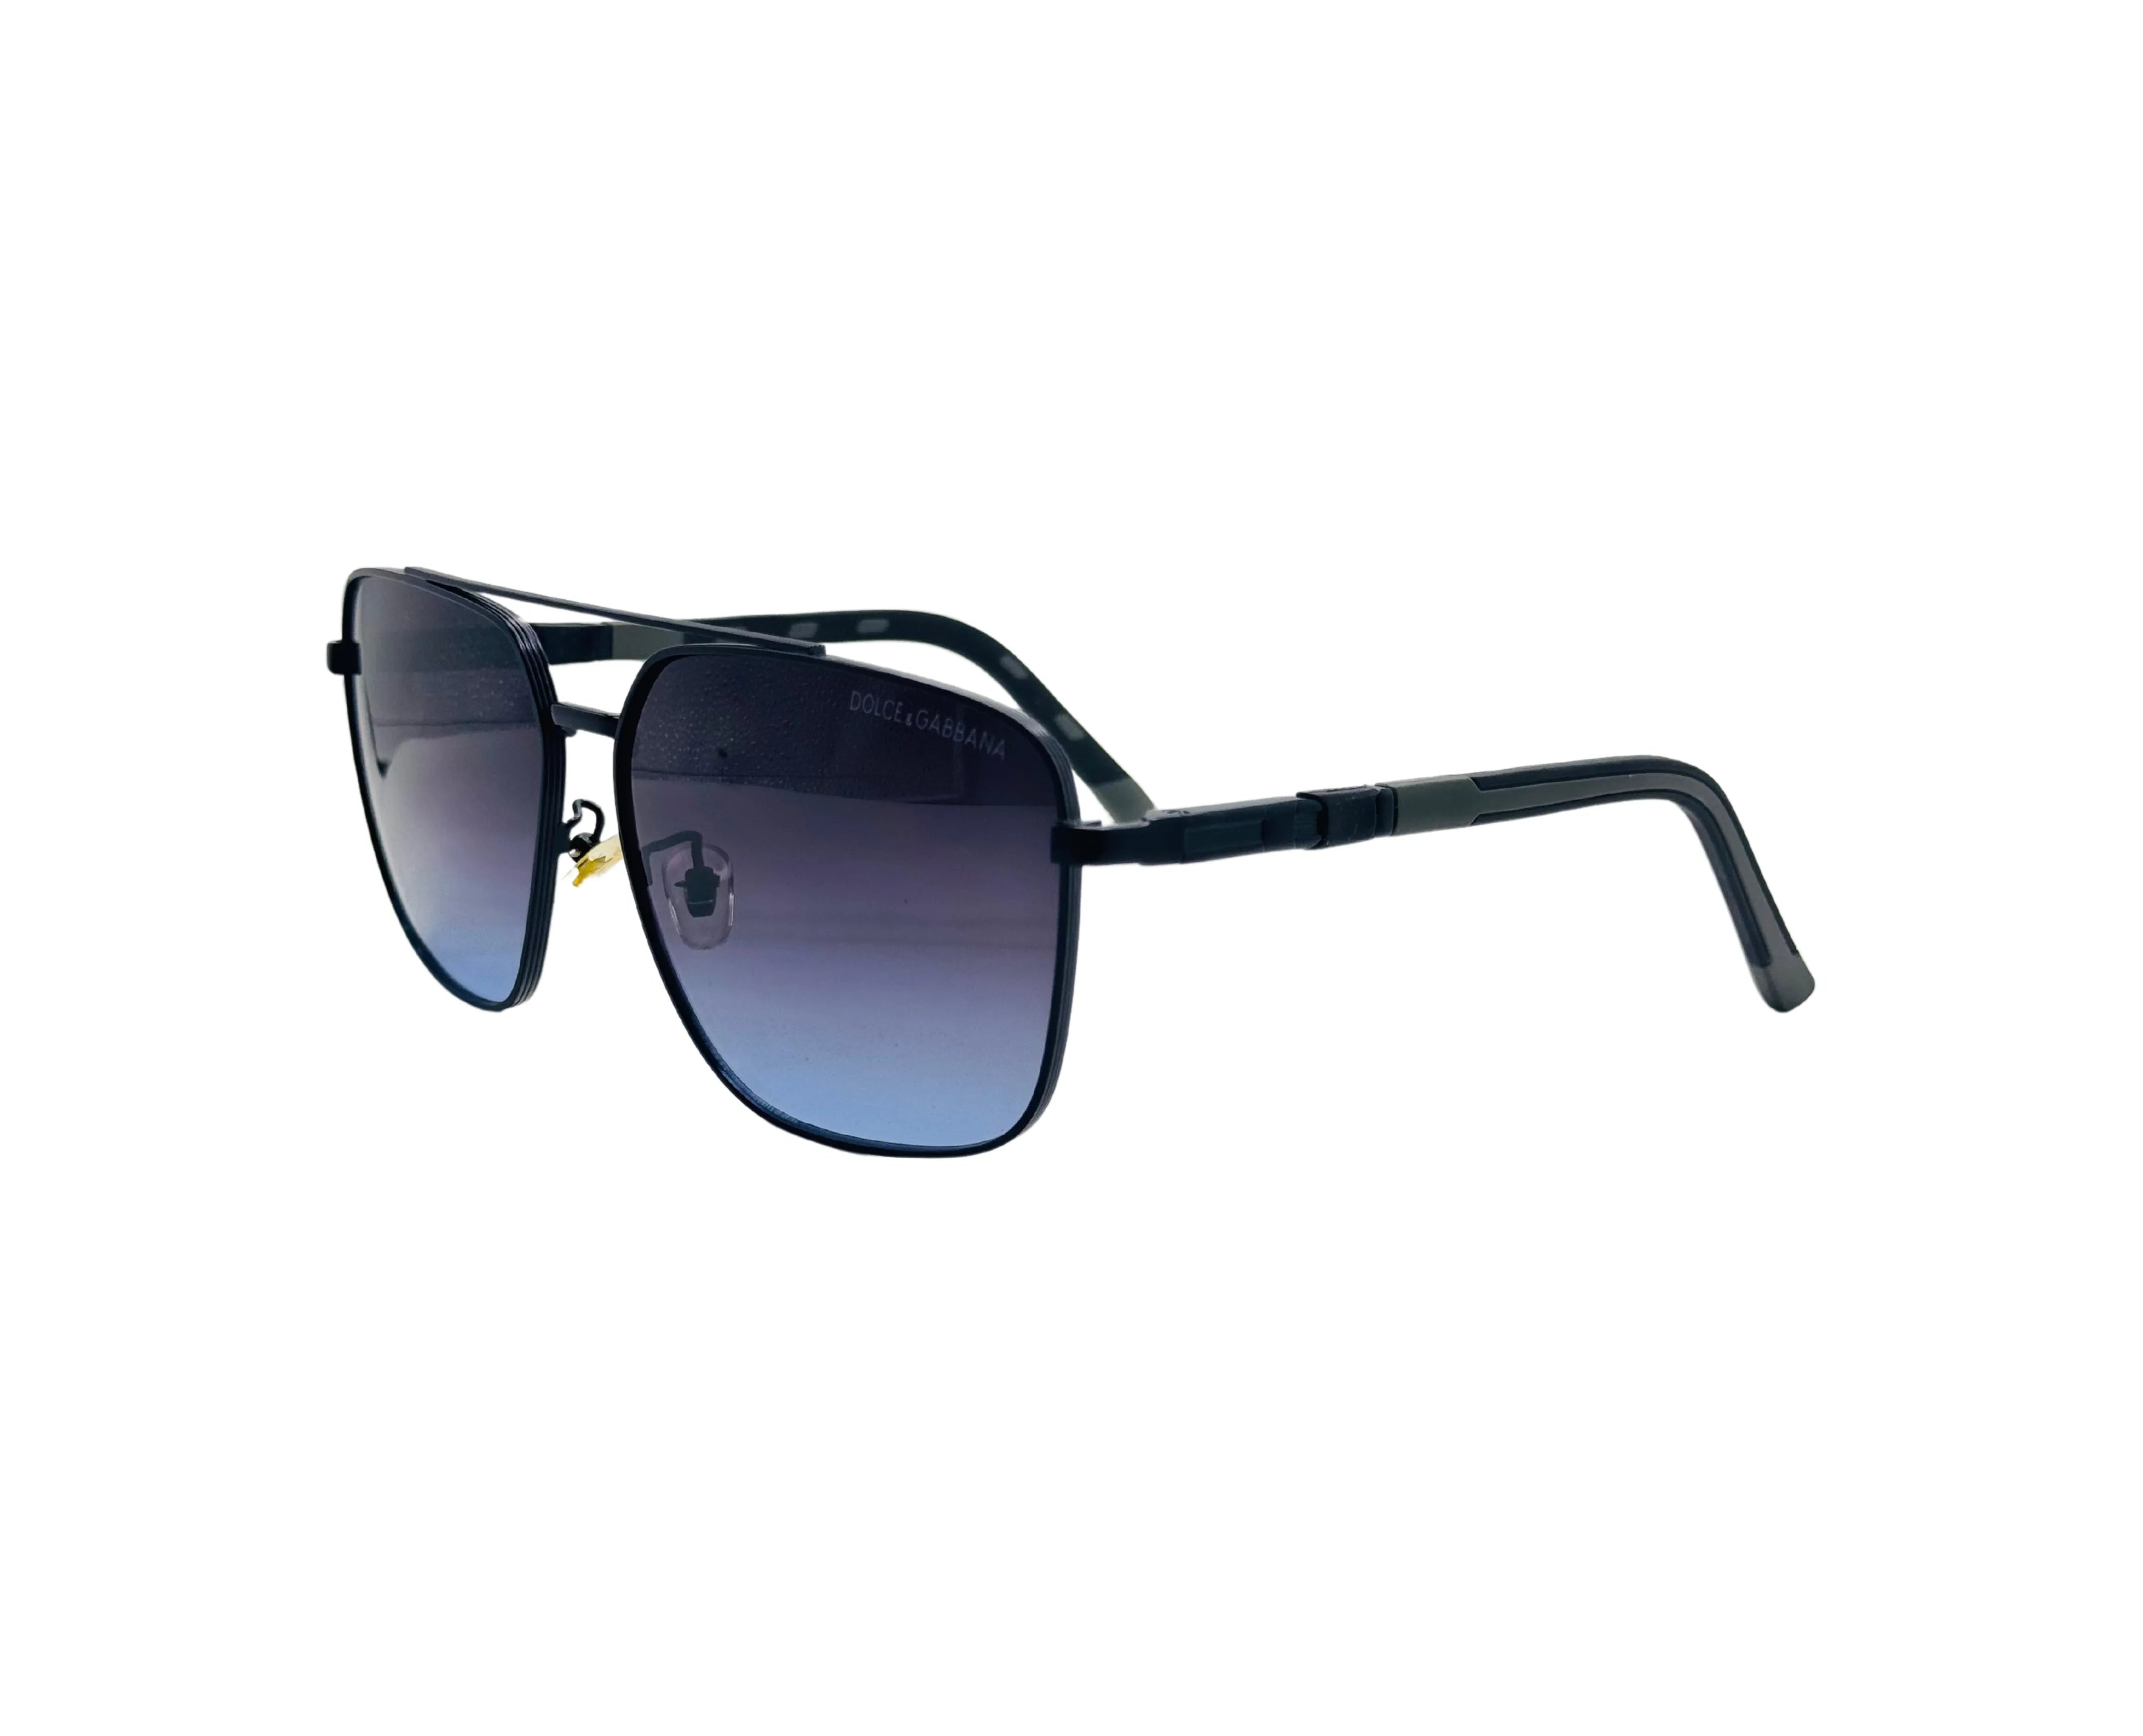 NS Deluxe - 10488 - Black - Sunglasses